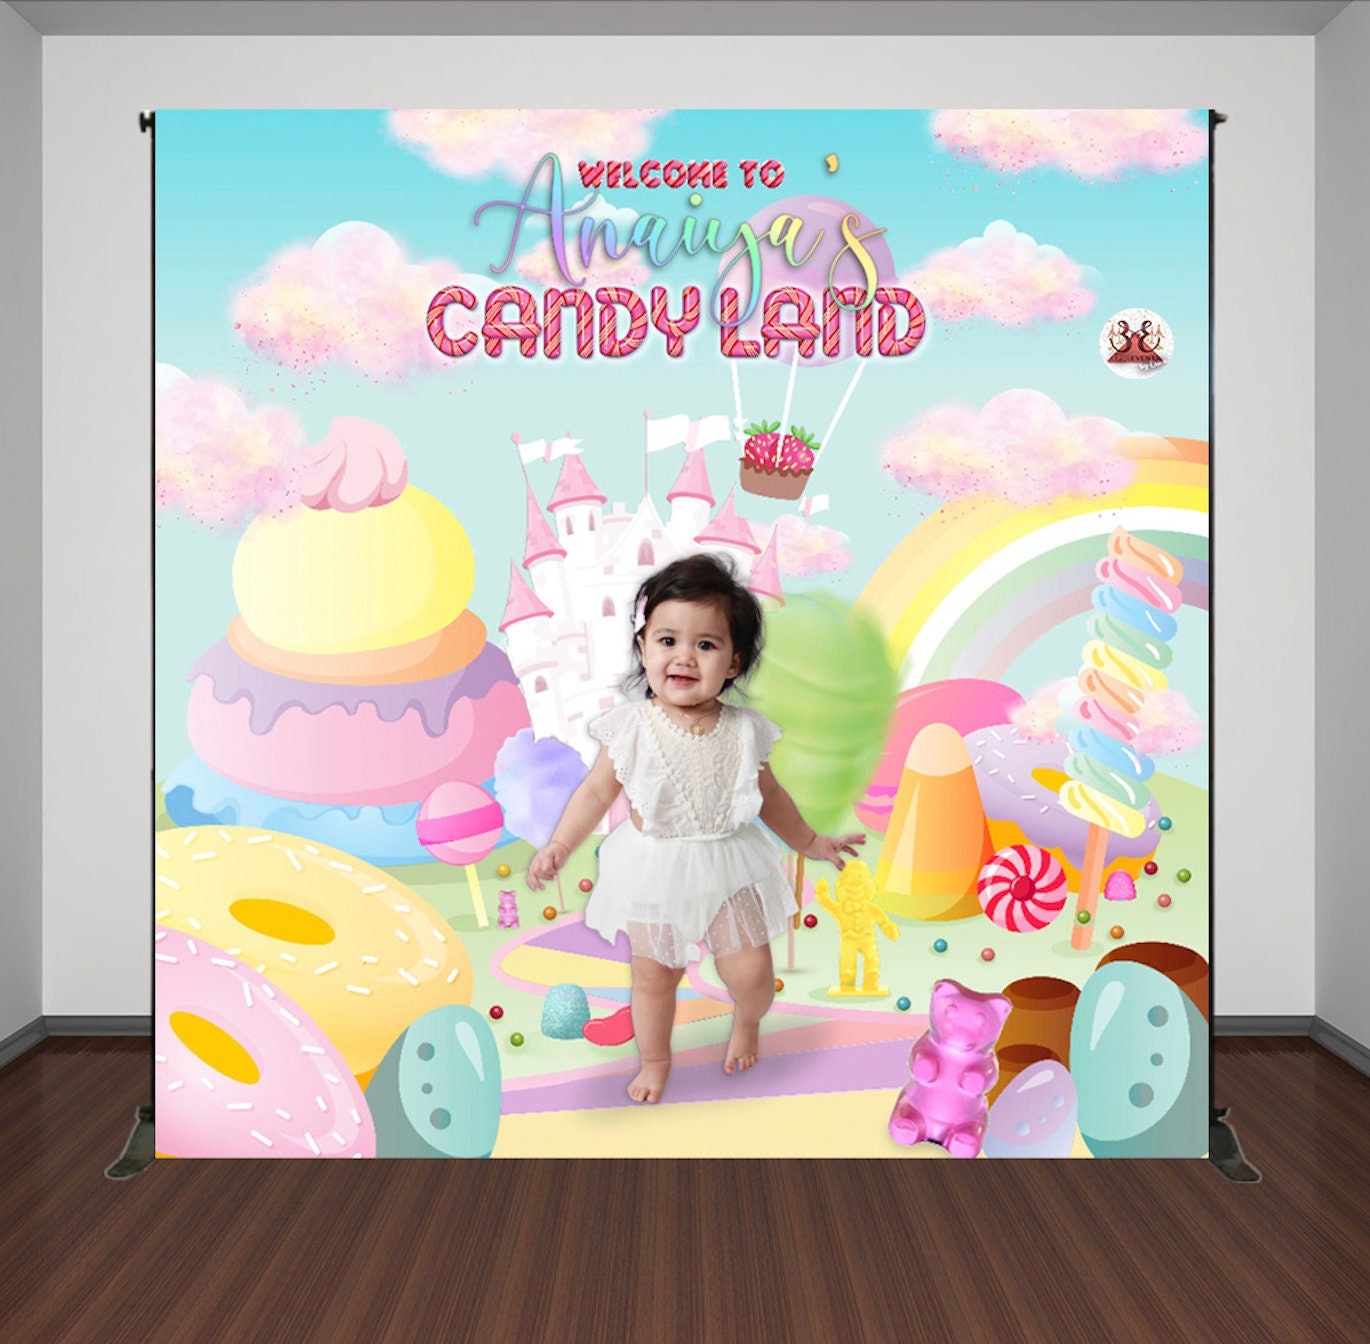 Rainbow Island photography backgrounds vinyl candy land newborn